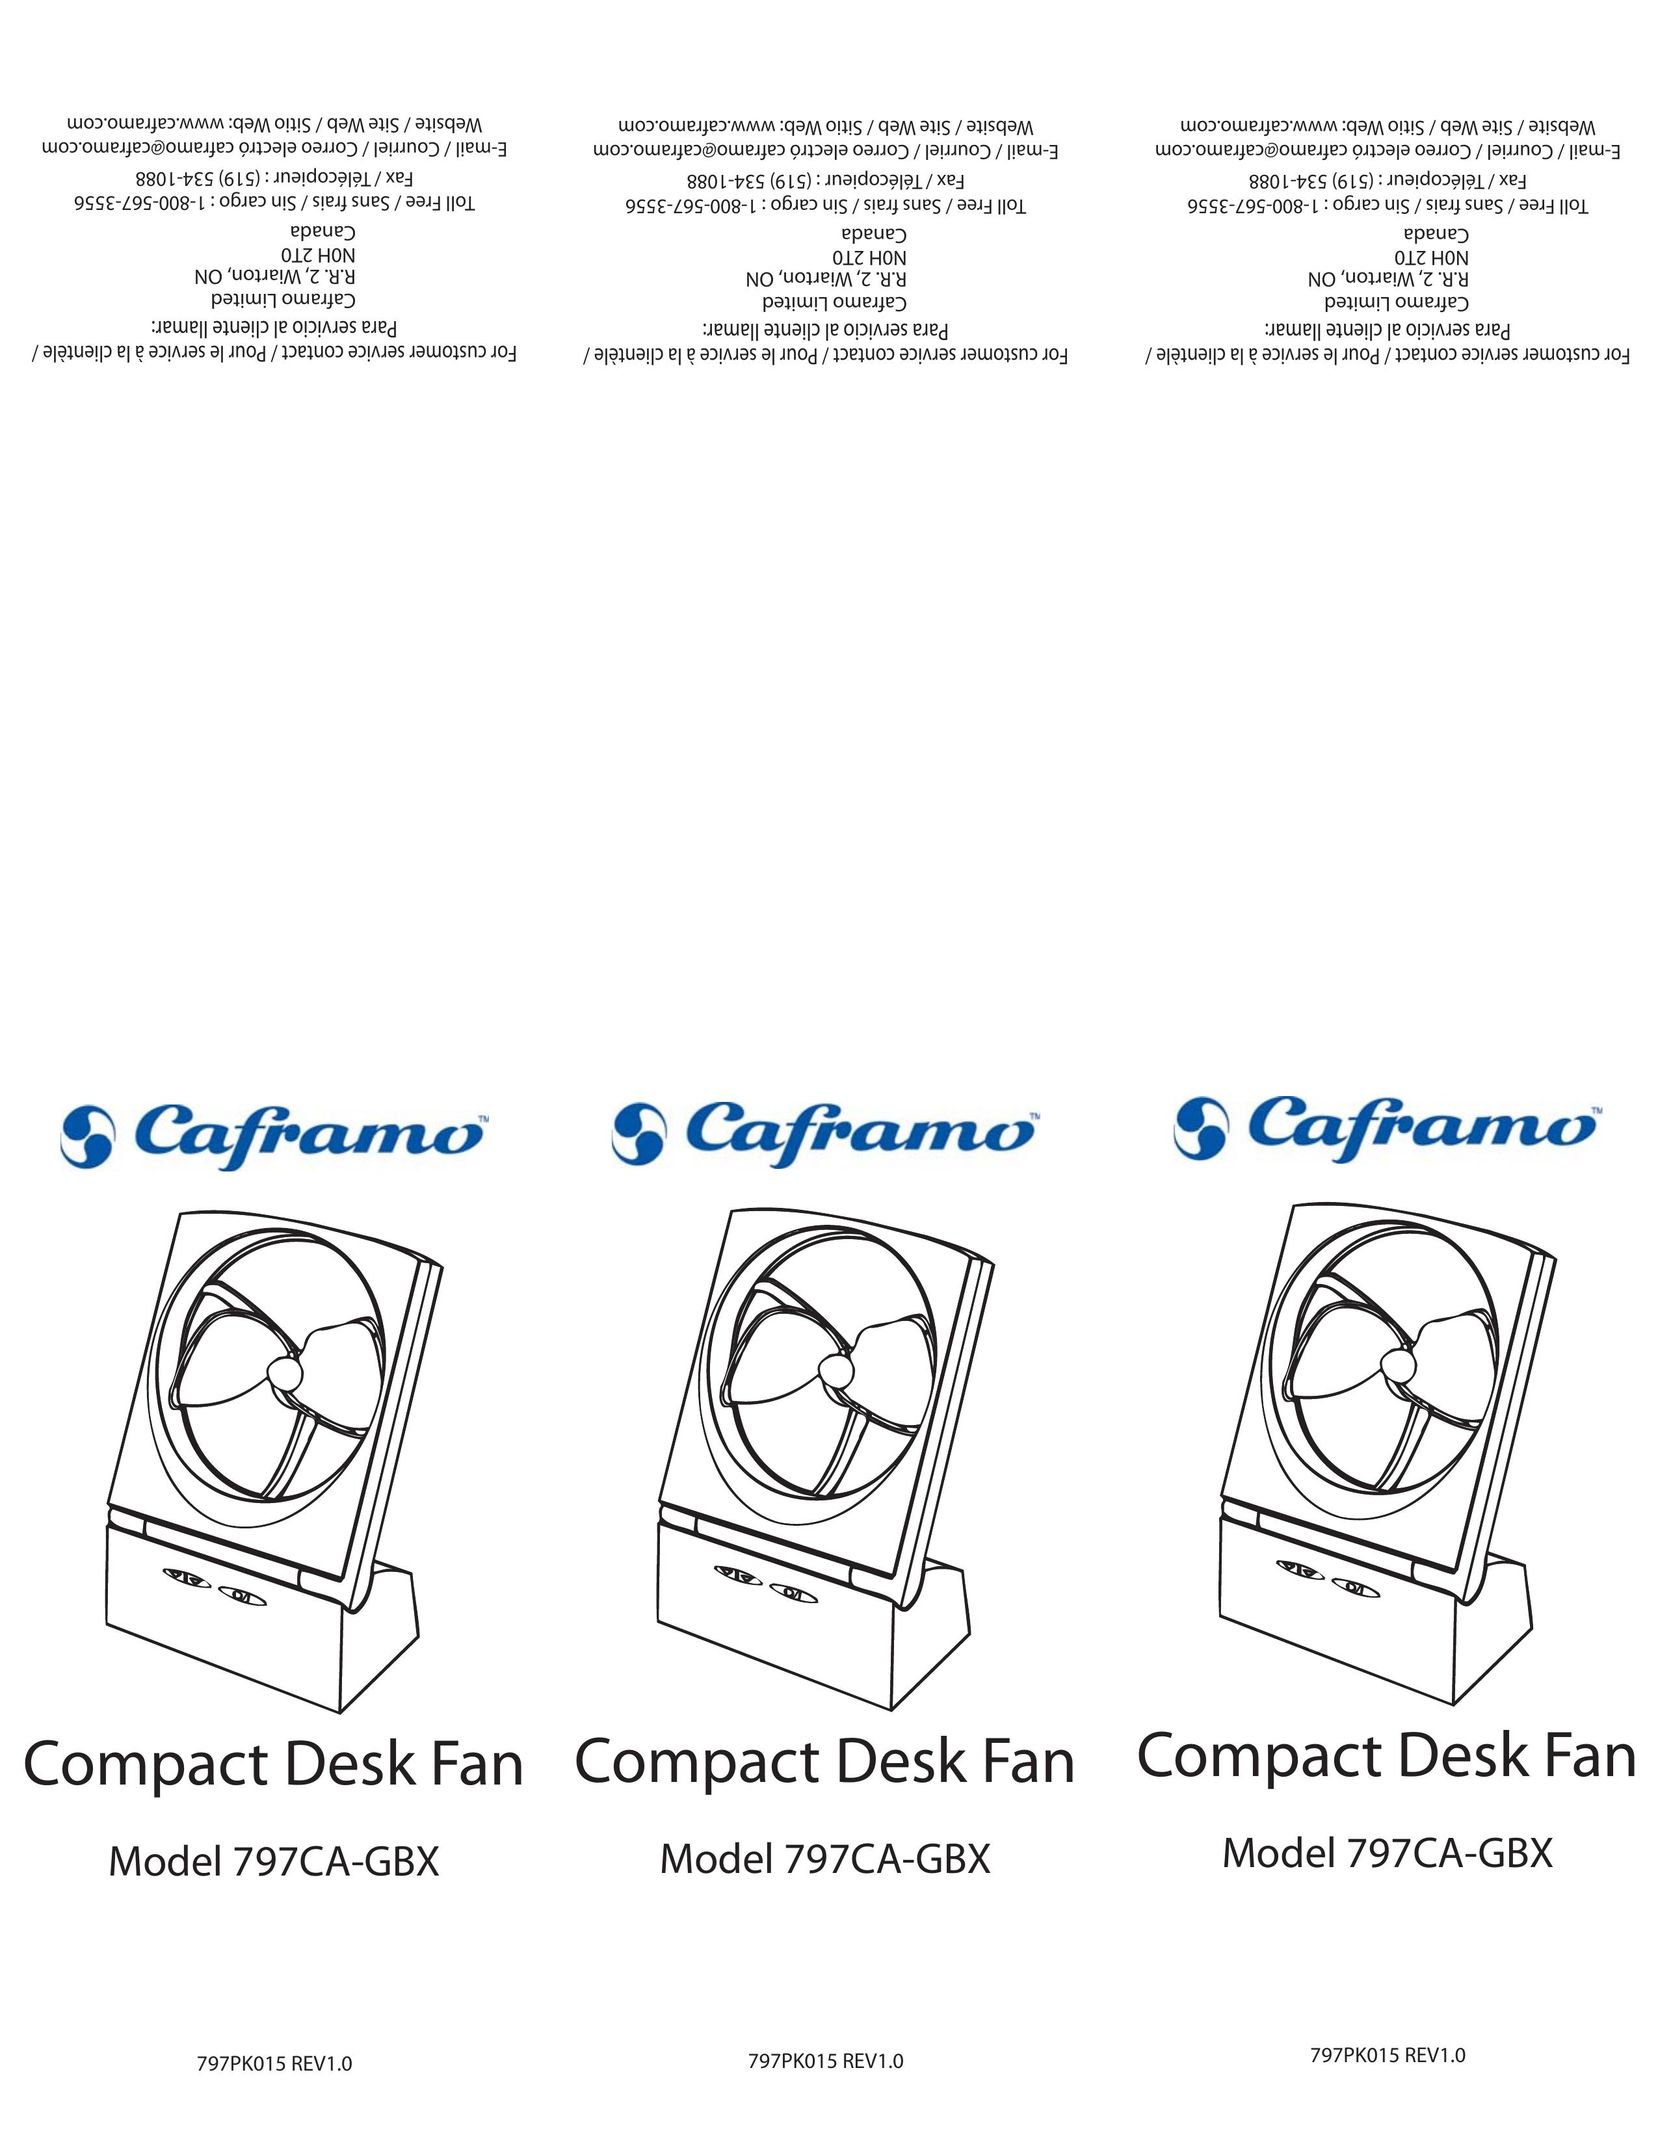 Caframo 797CA-GBX Fan User Manual